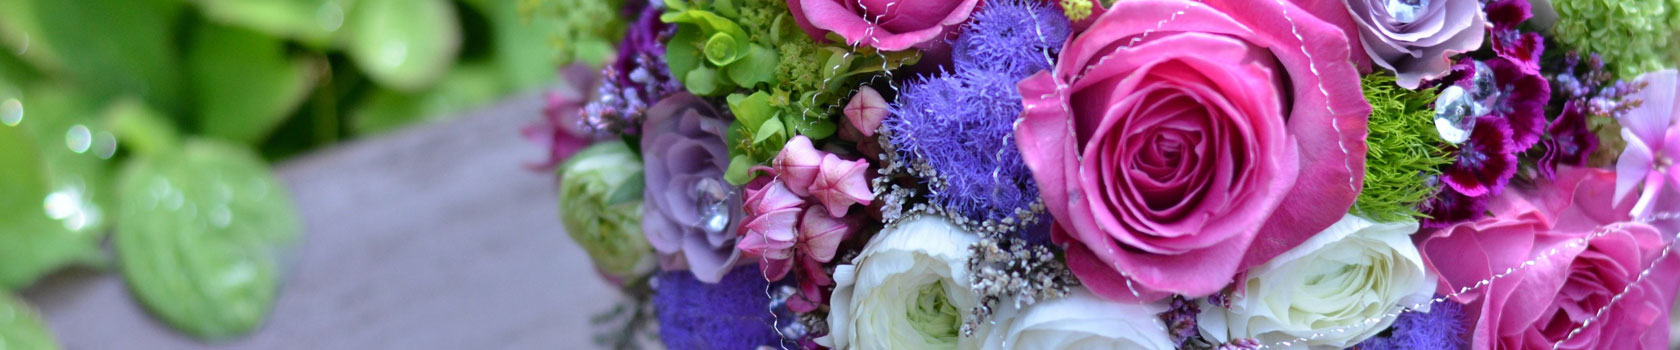 Blumen Sanders - Hochzeit - Autodeko  Autodeko hochzeit, Autoschmuck  hochzeit, Blumenschmuck hochzeit